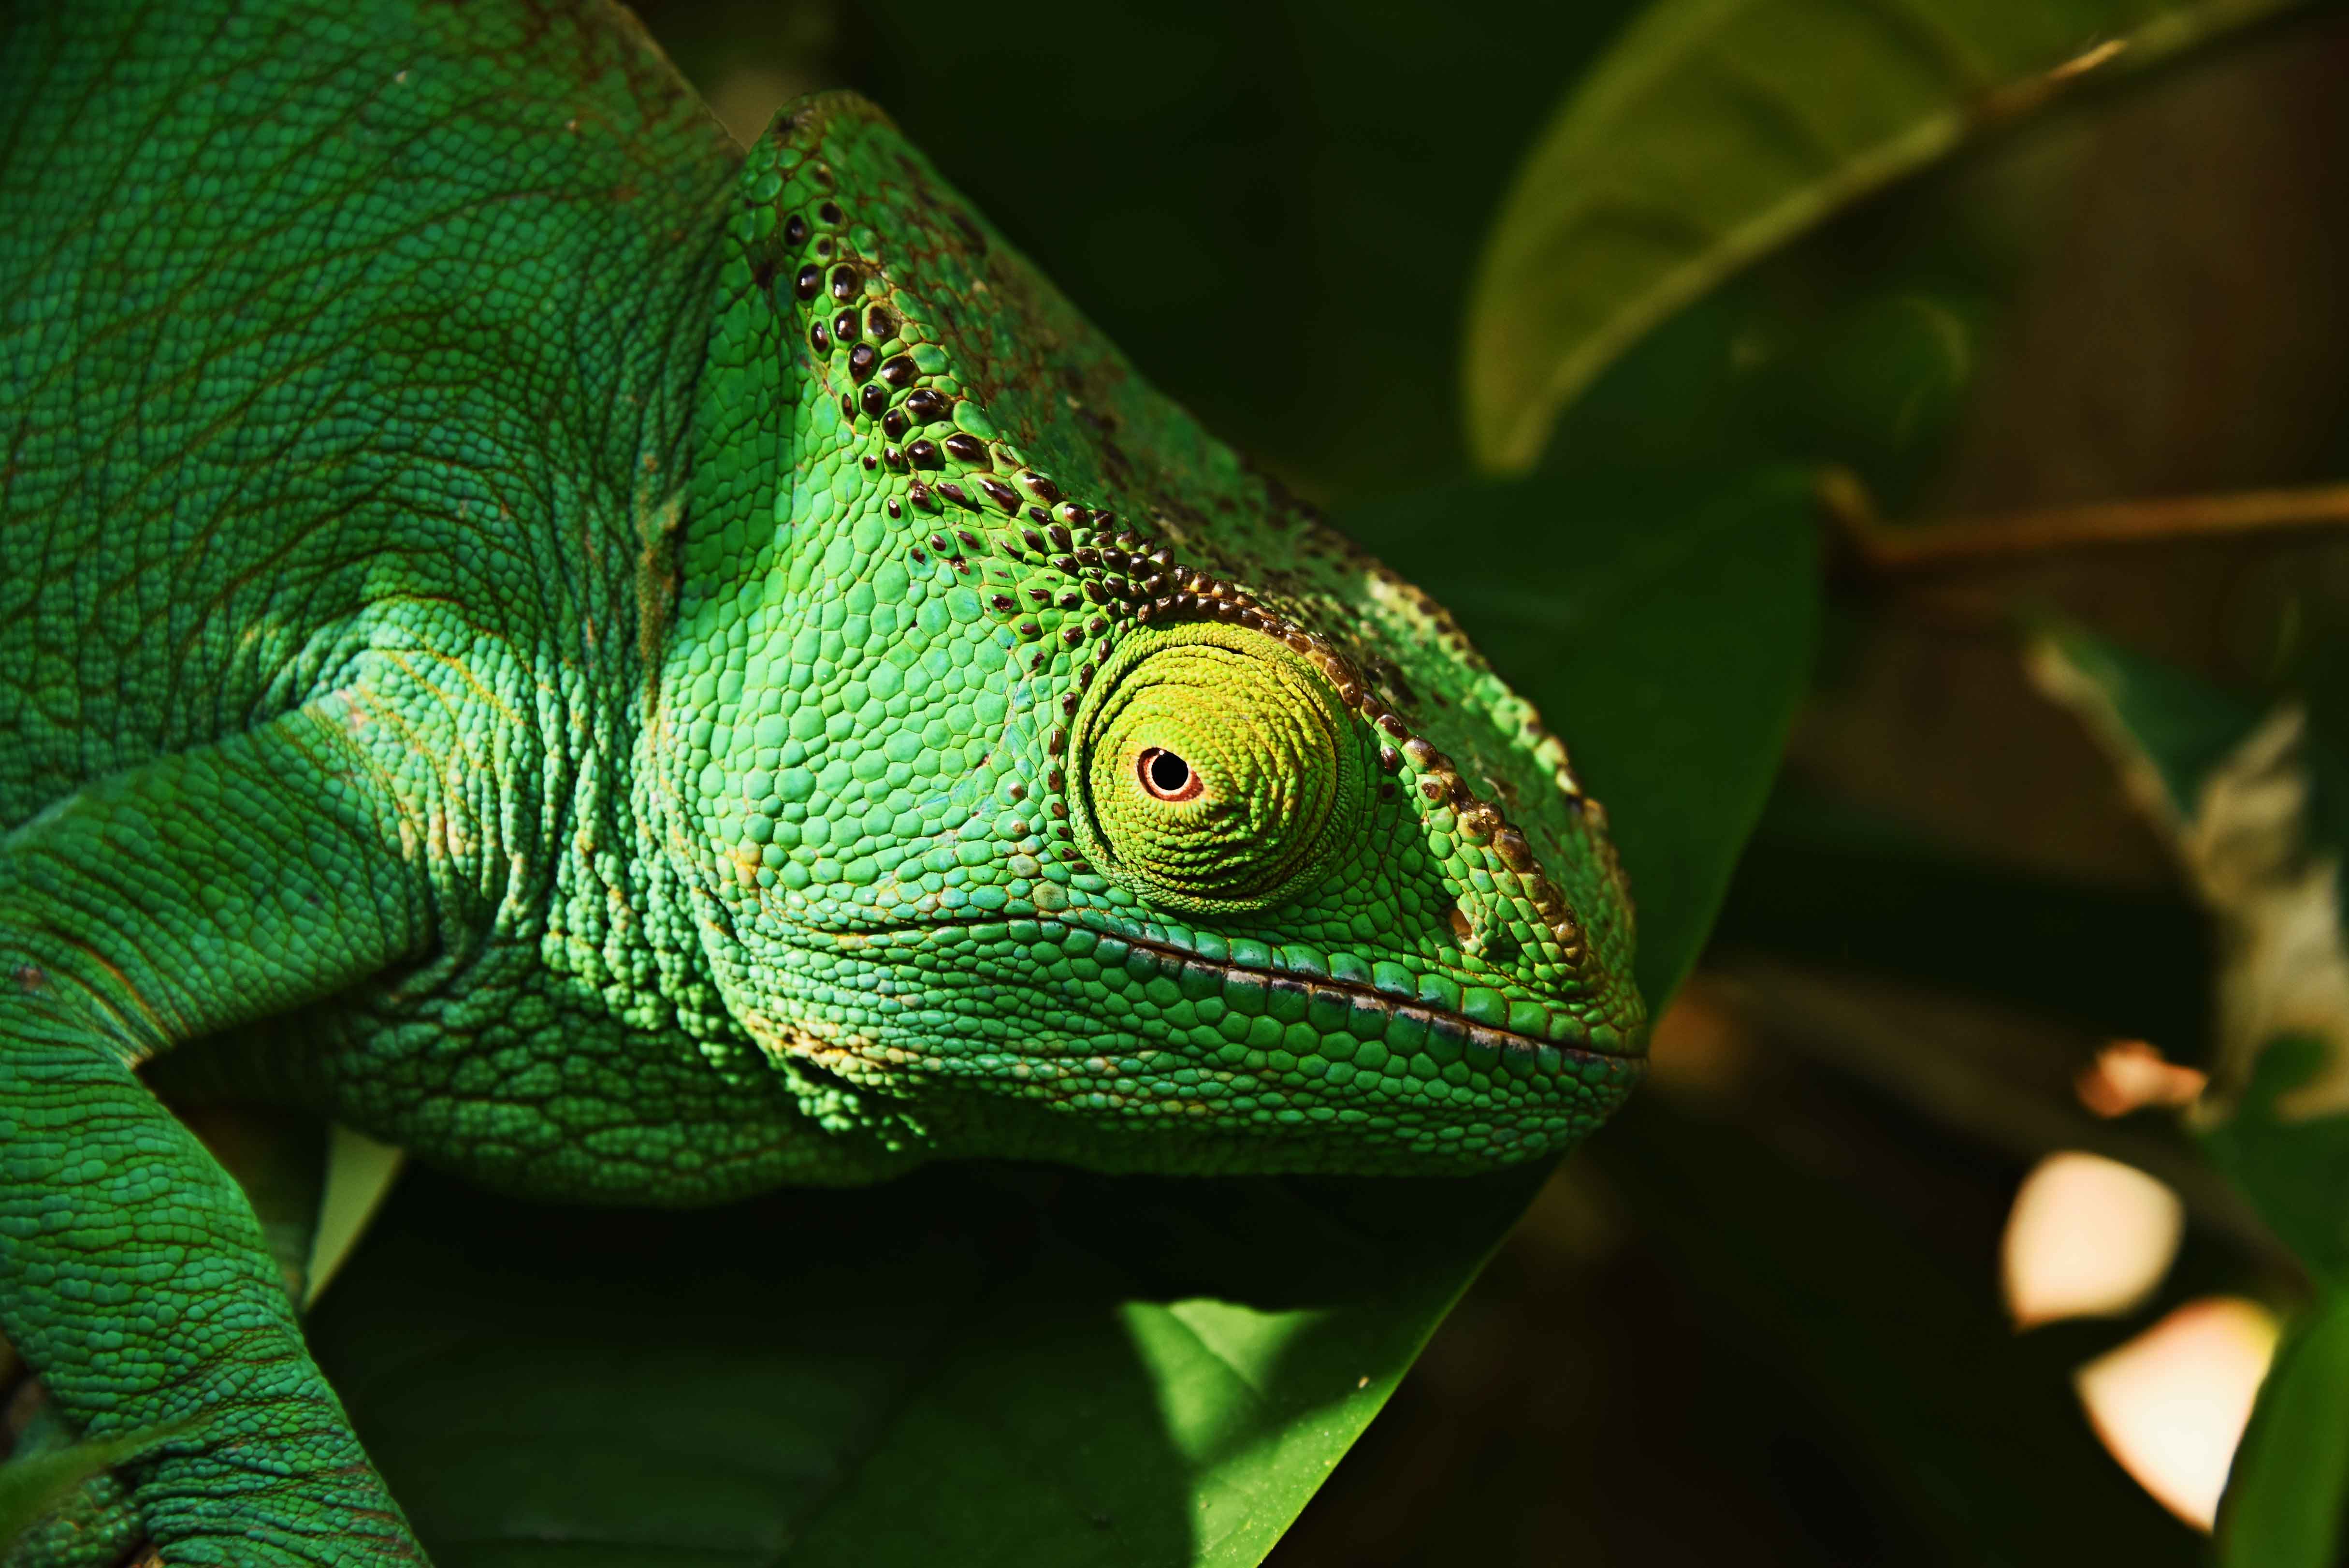 Descarga gratis la imagen Animales, Lagarto, Reptil, Iguana, Lagartija, Ojo en el escritorio de tu PC